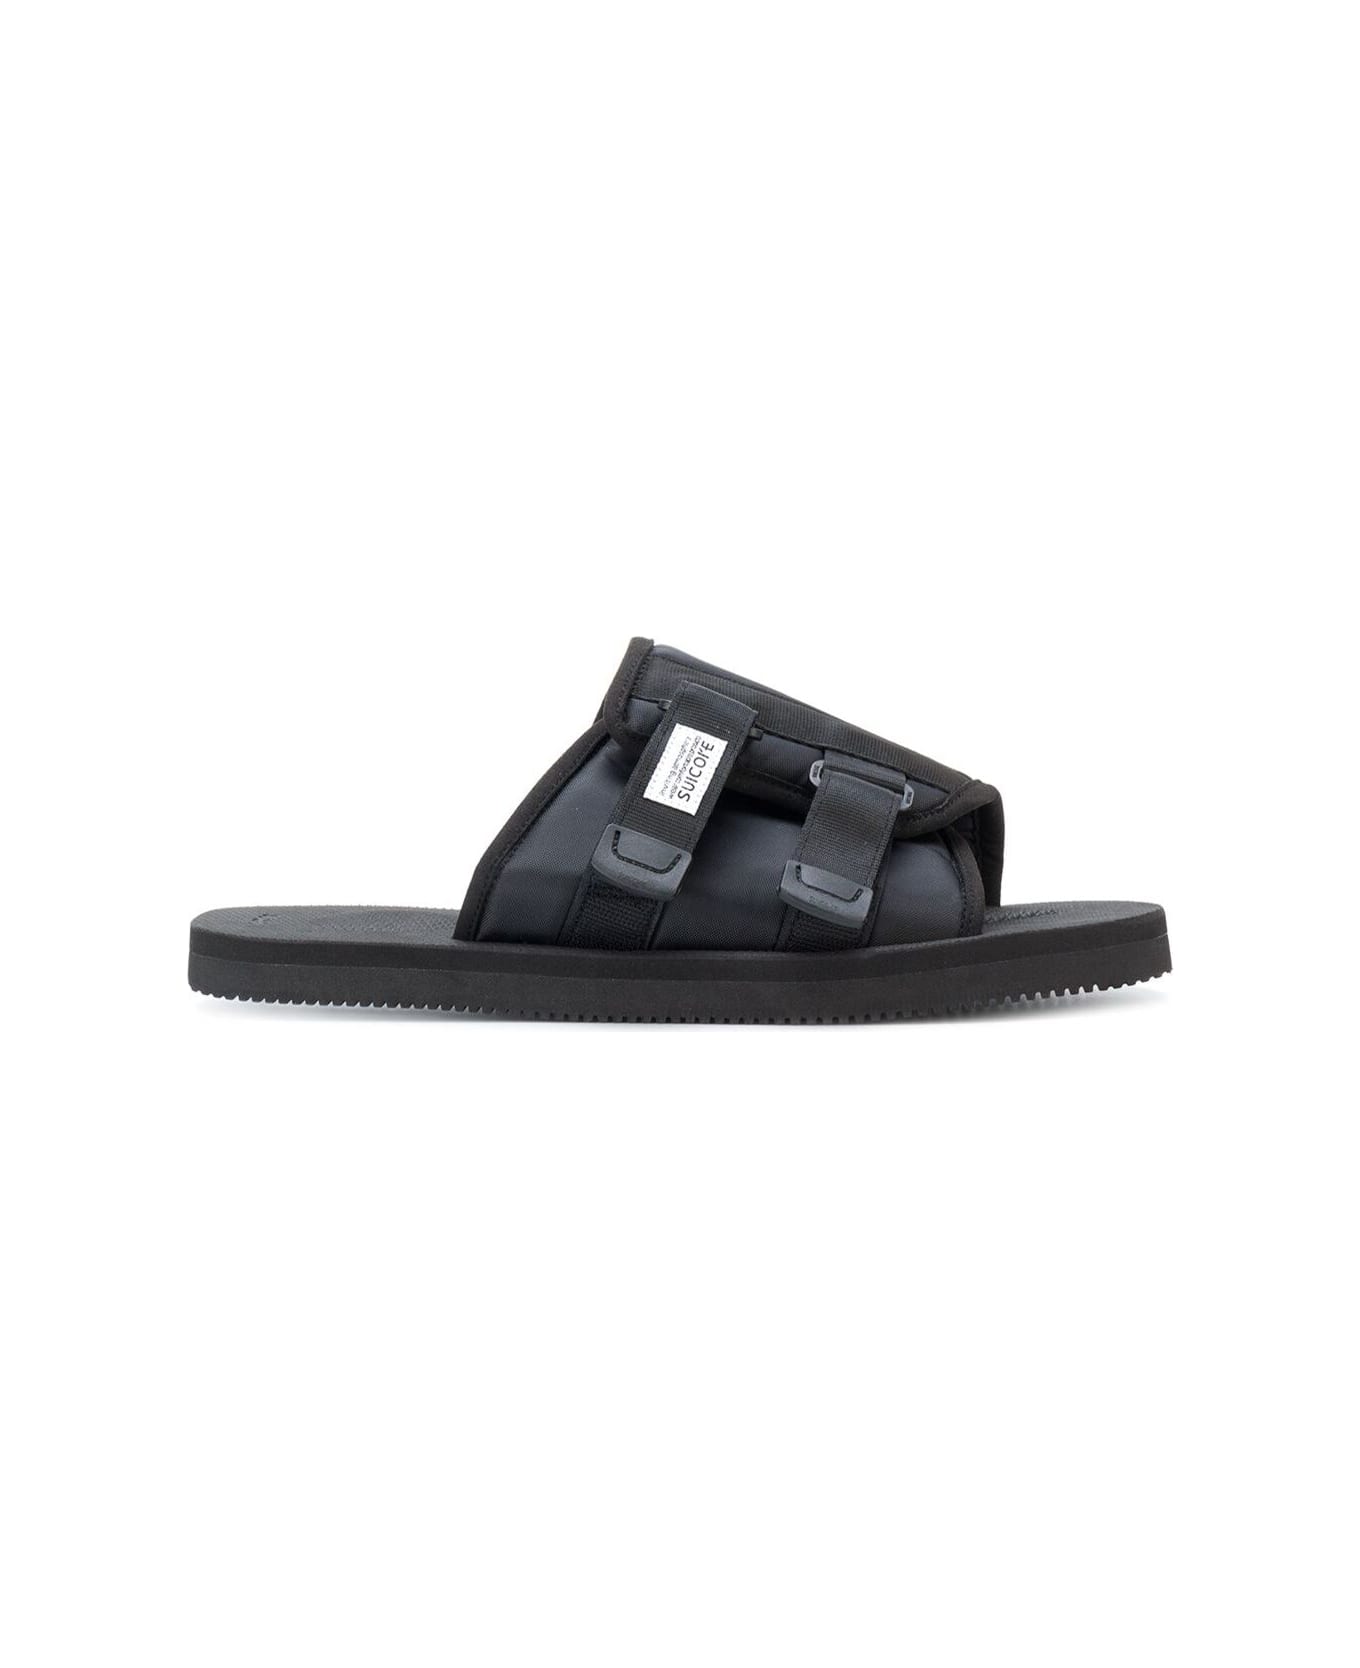 SUICOKE 'kaw-cab' Black Sandals With Velcro Fastening In Nylon Woman Suicoke - Black